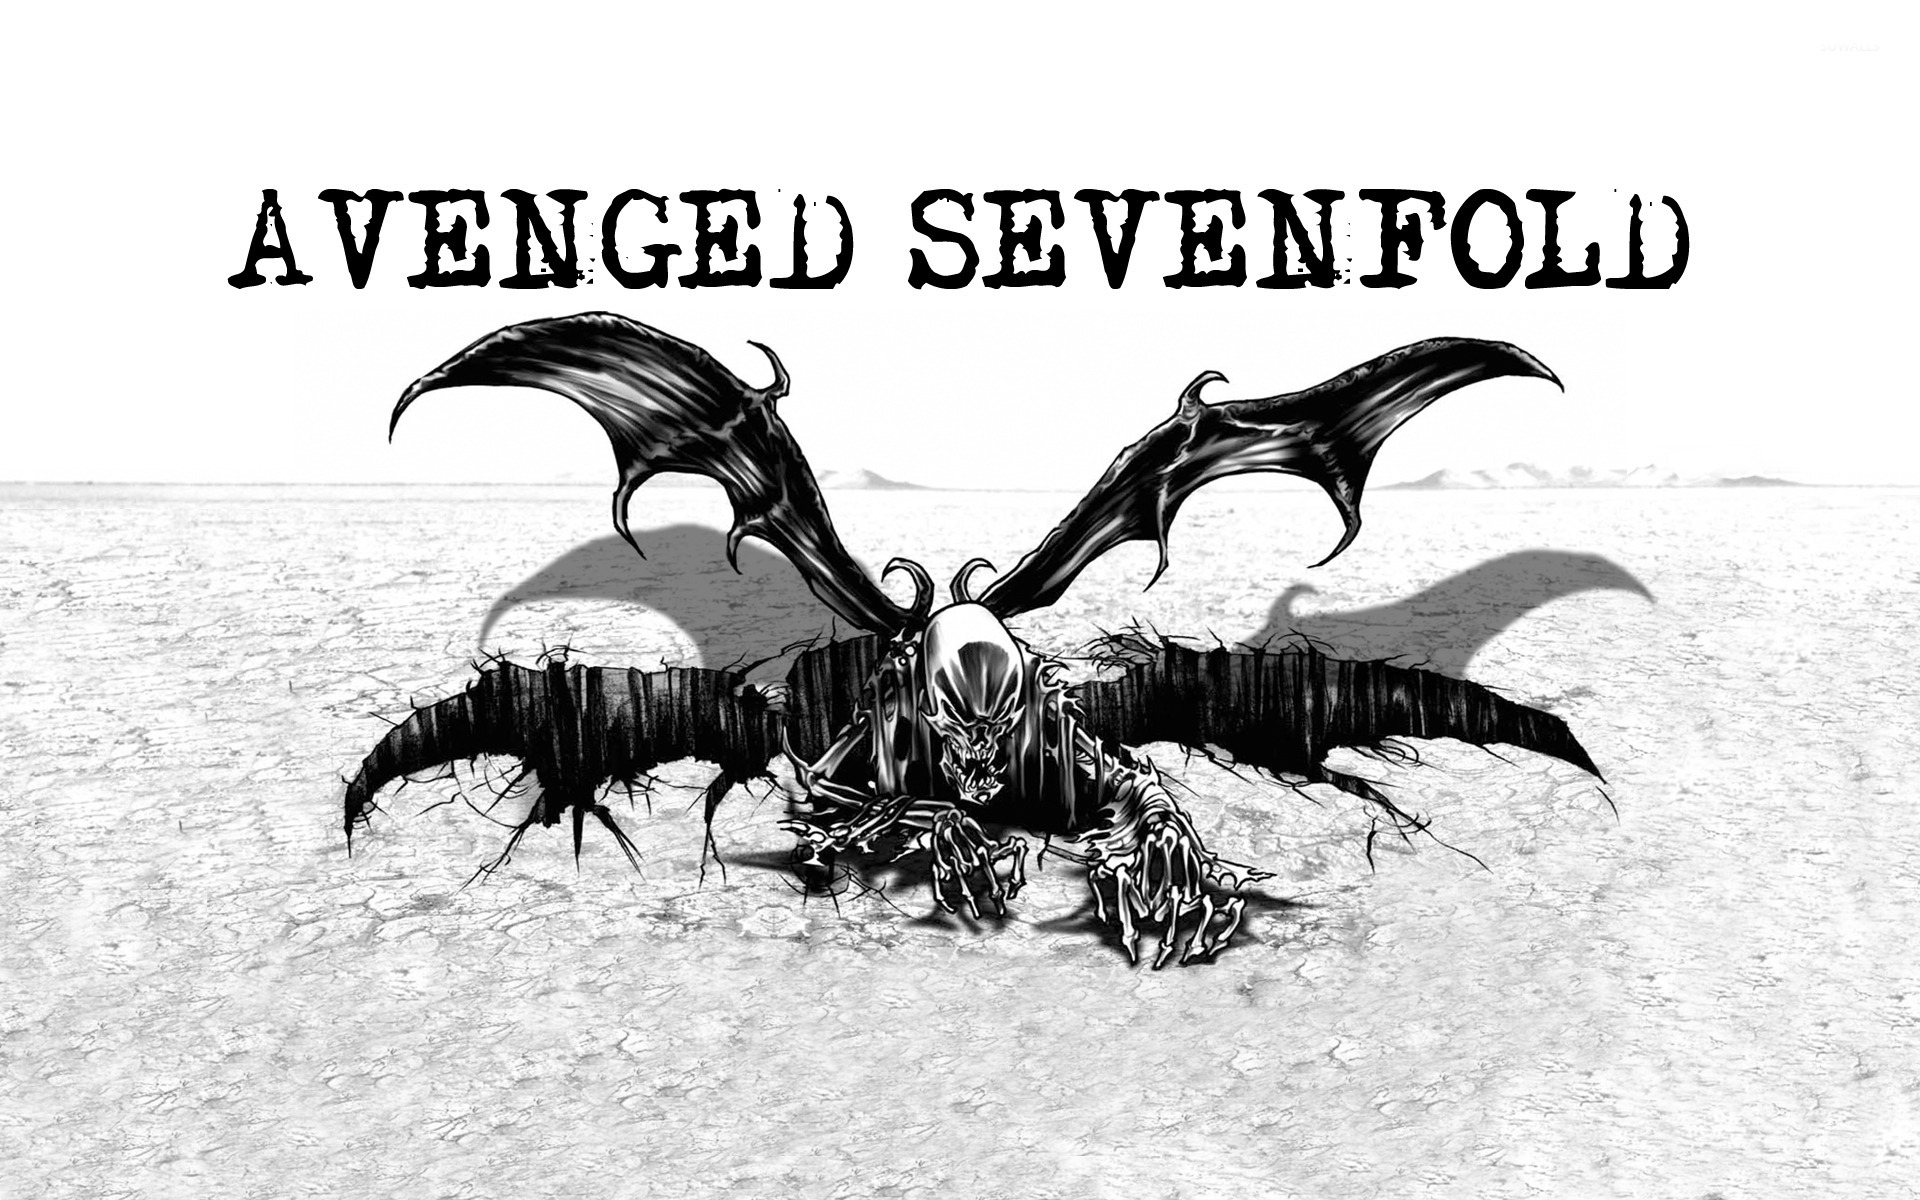 Avenged Sevenfold Wallpapers